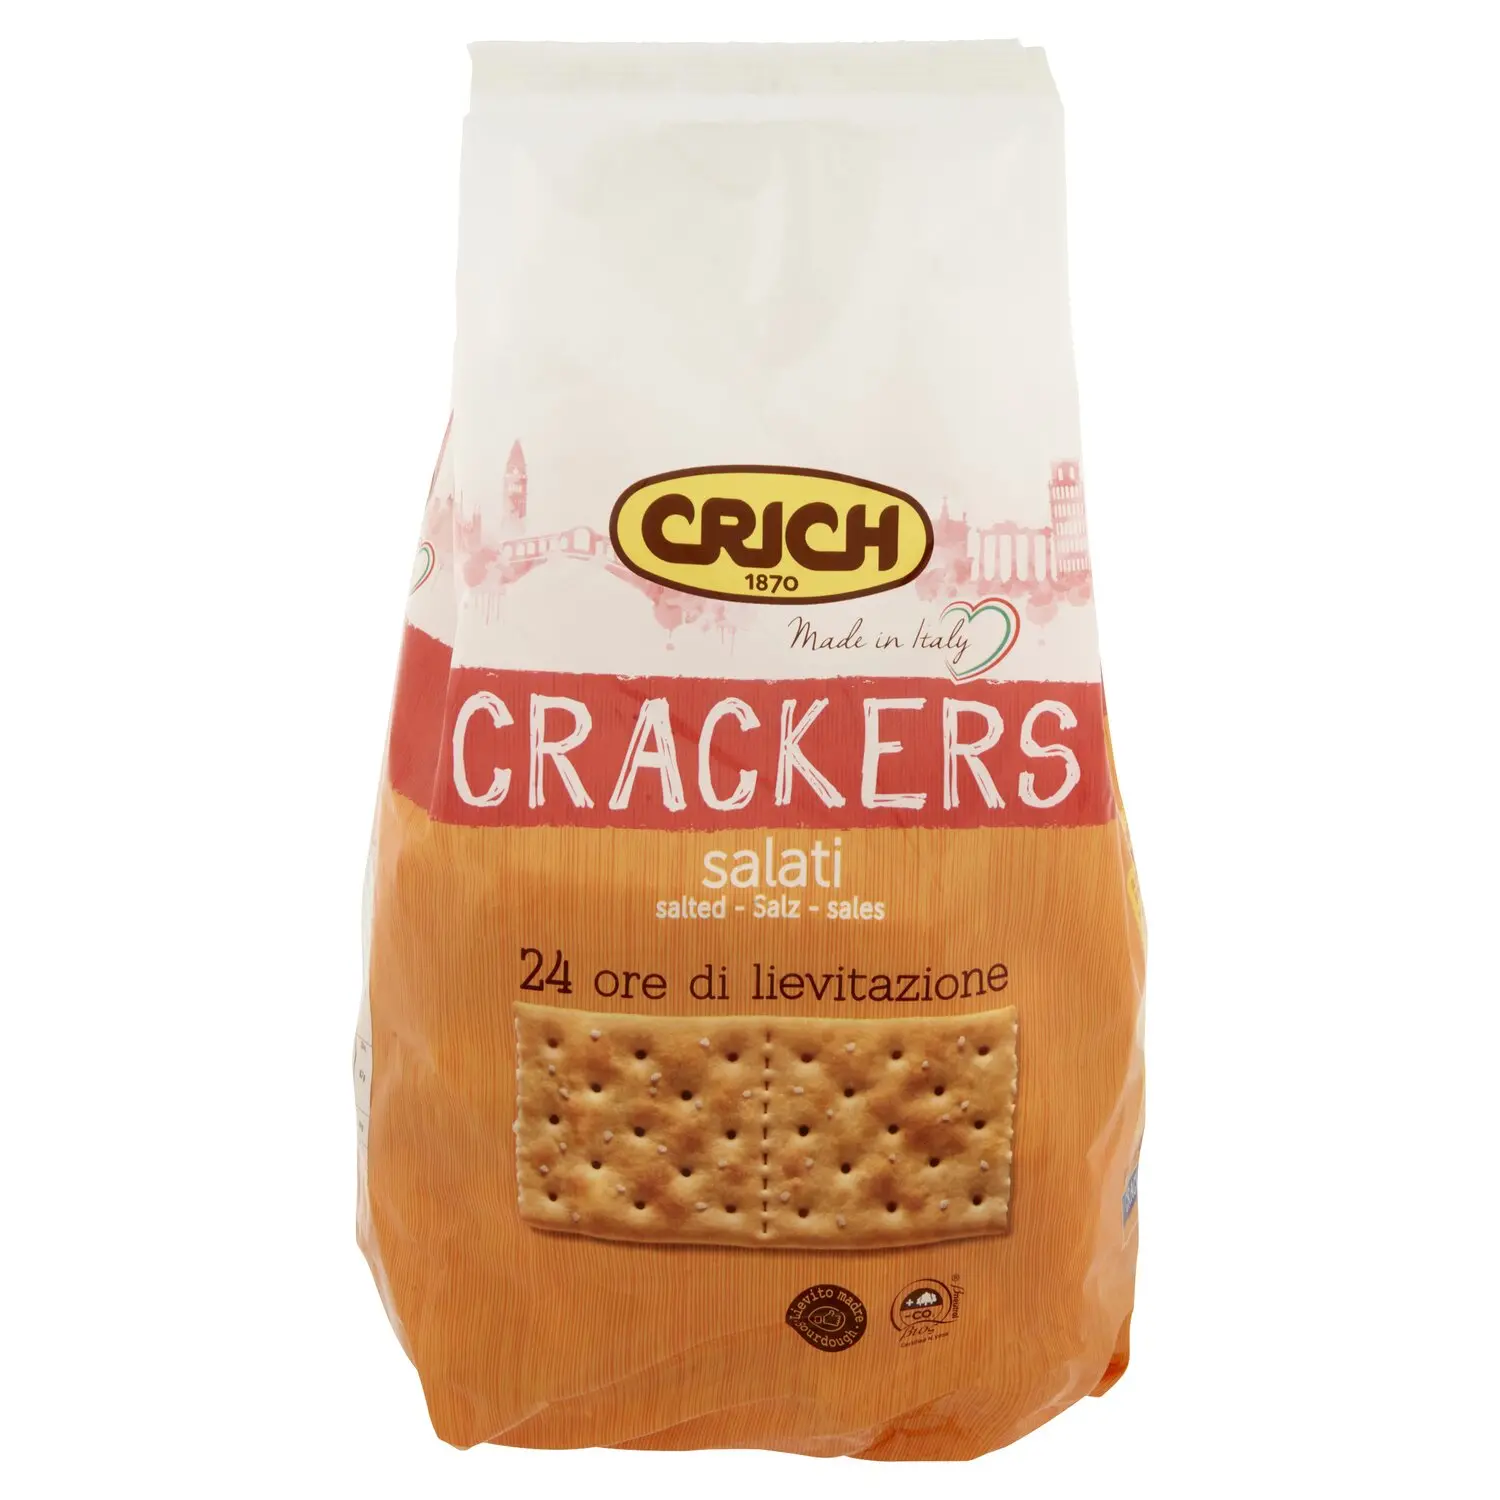 CRACKERS SALATI 750g - Crich Biscotti, Wafers, Crackers, snack e salatini